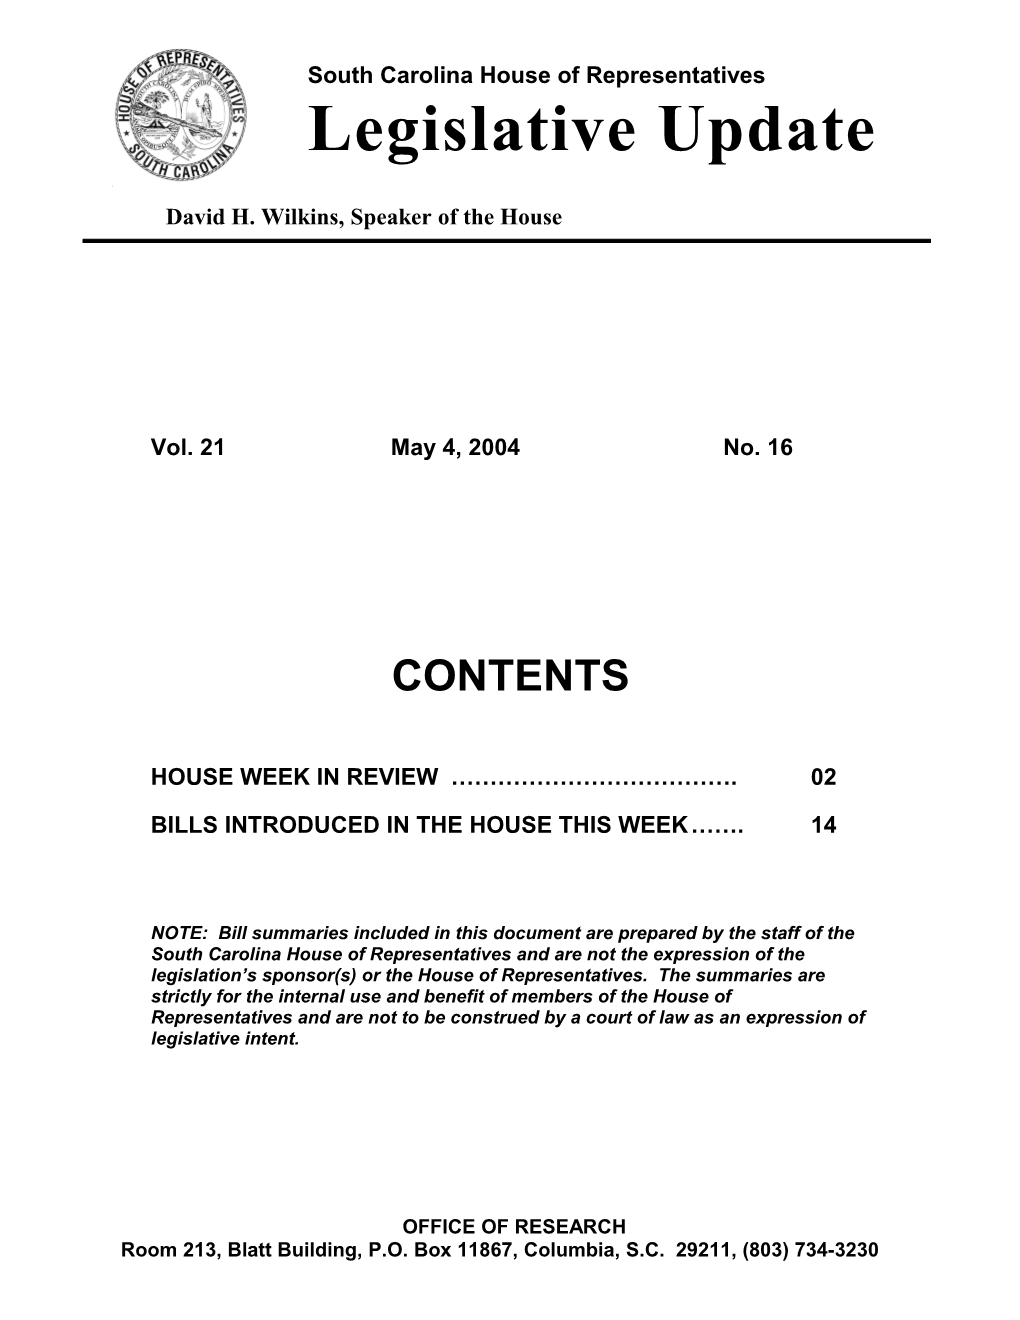 Legislative Update - Vol. 21 No. 16 May 4, 2004 - South Carolina Legislature Online